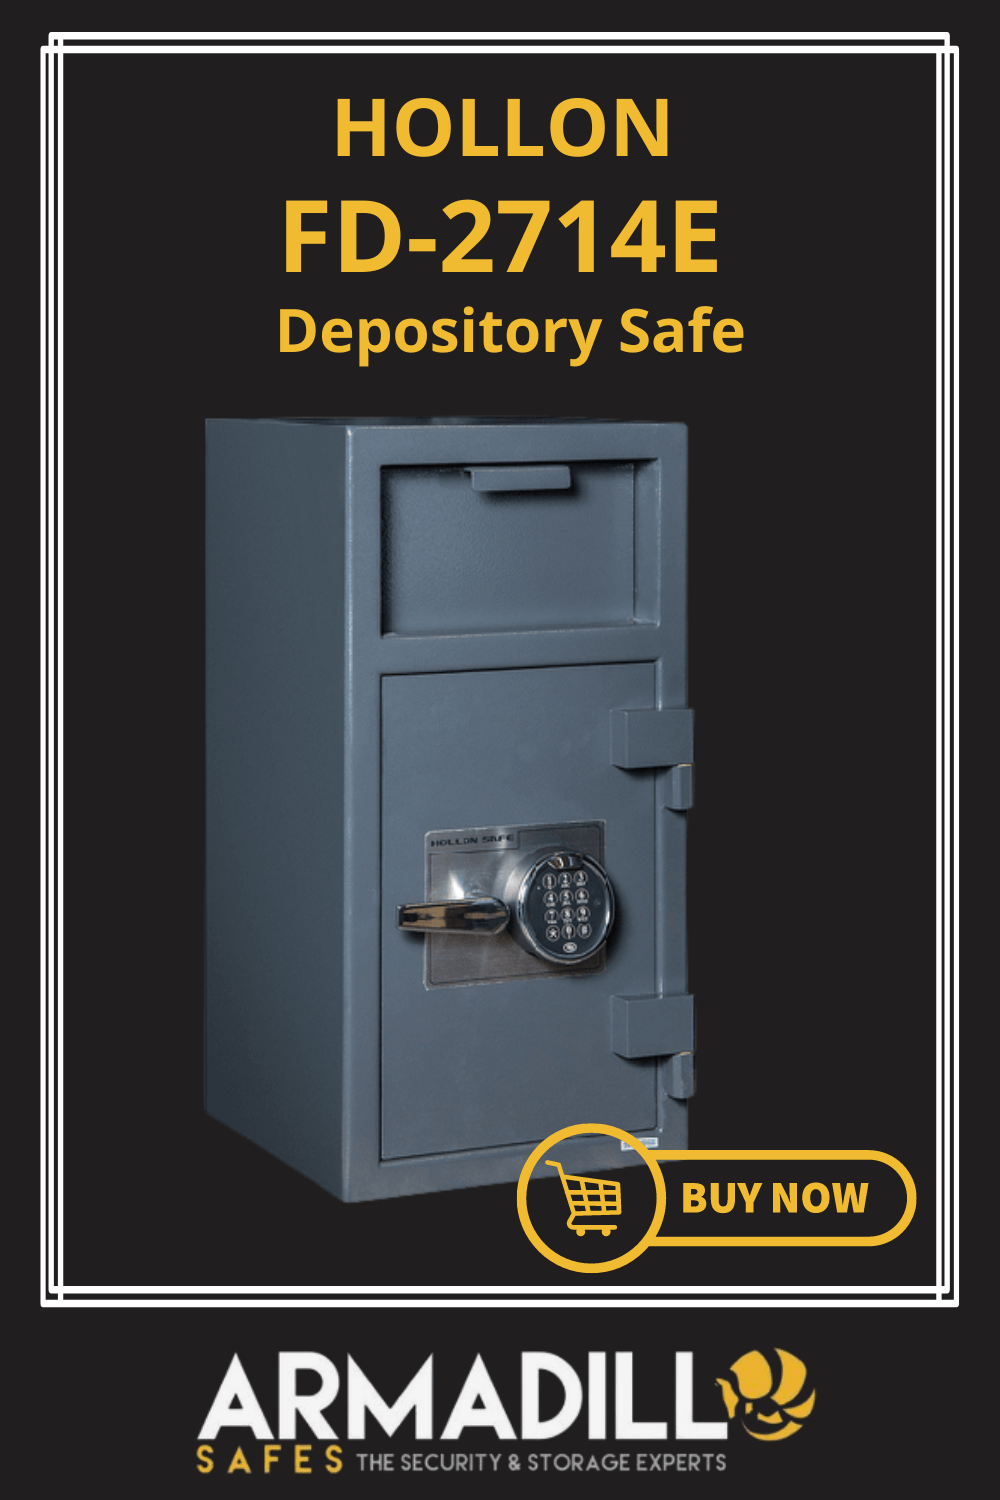 Hollon FD-2714E Depository Safe Armadillo Safe and Vault